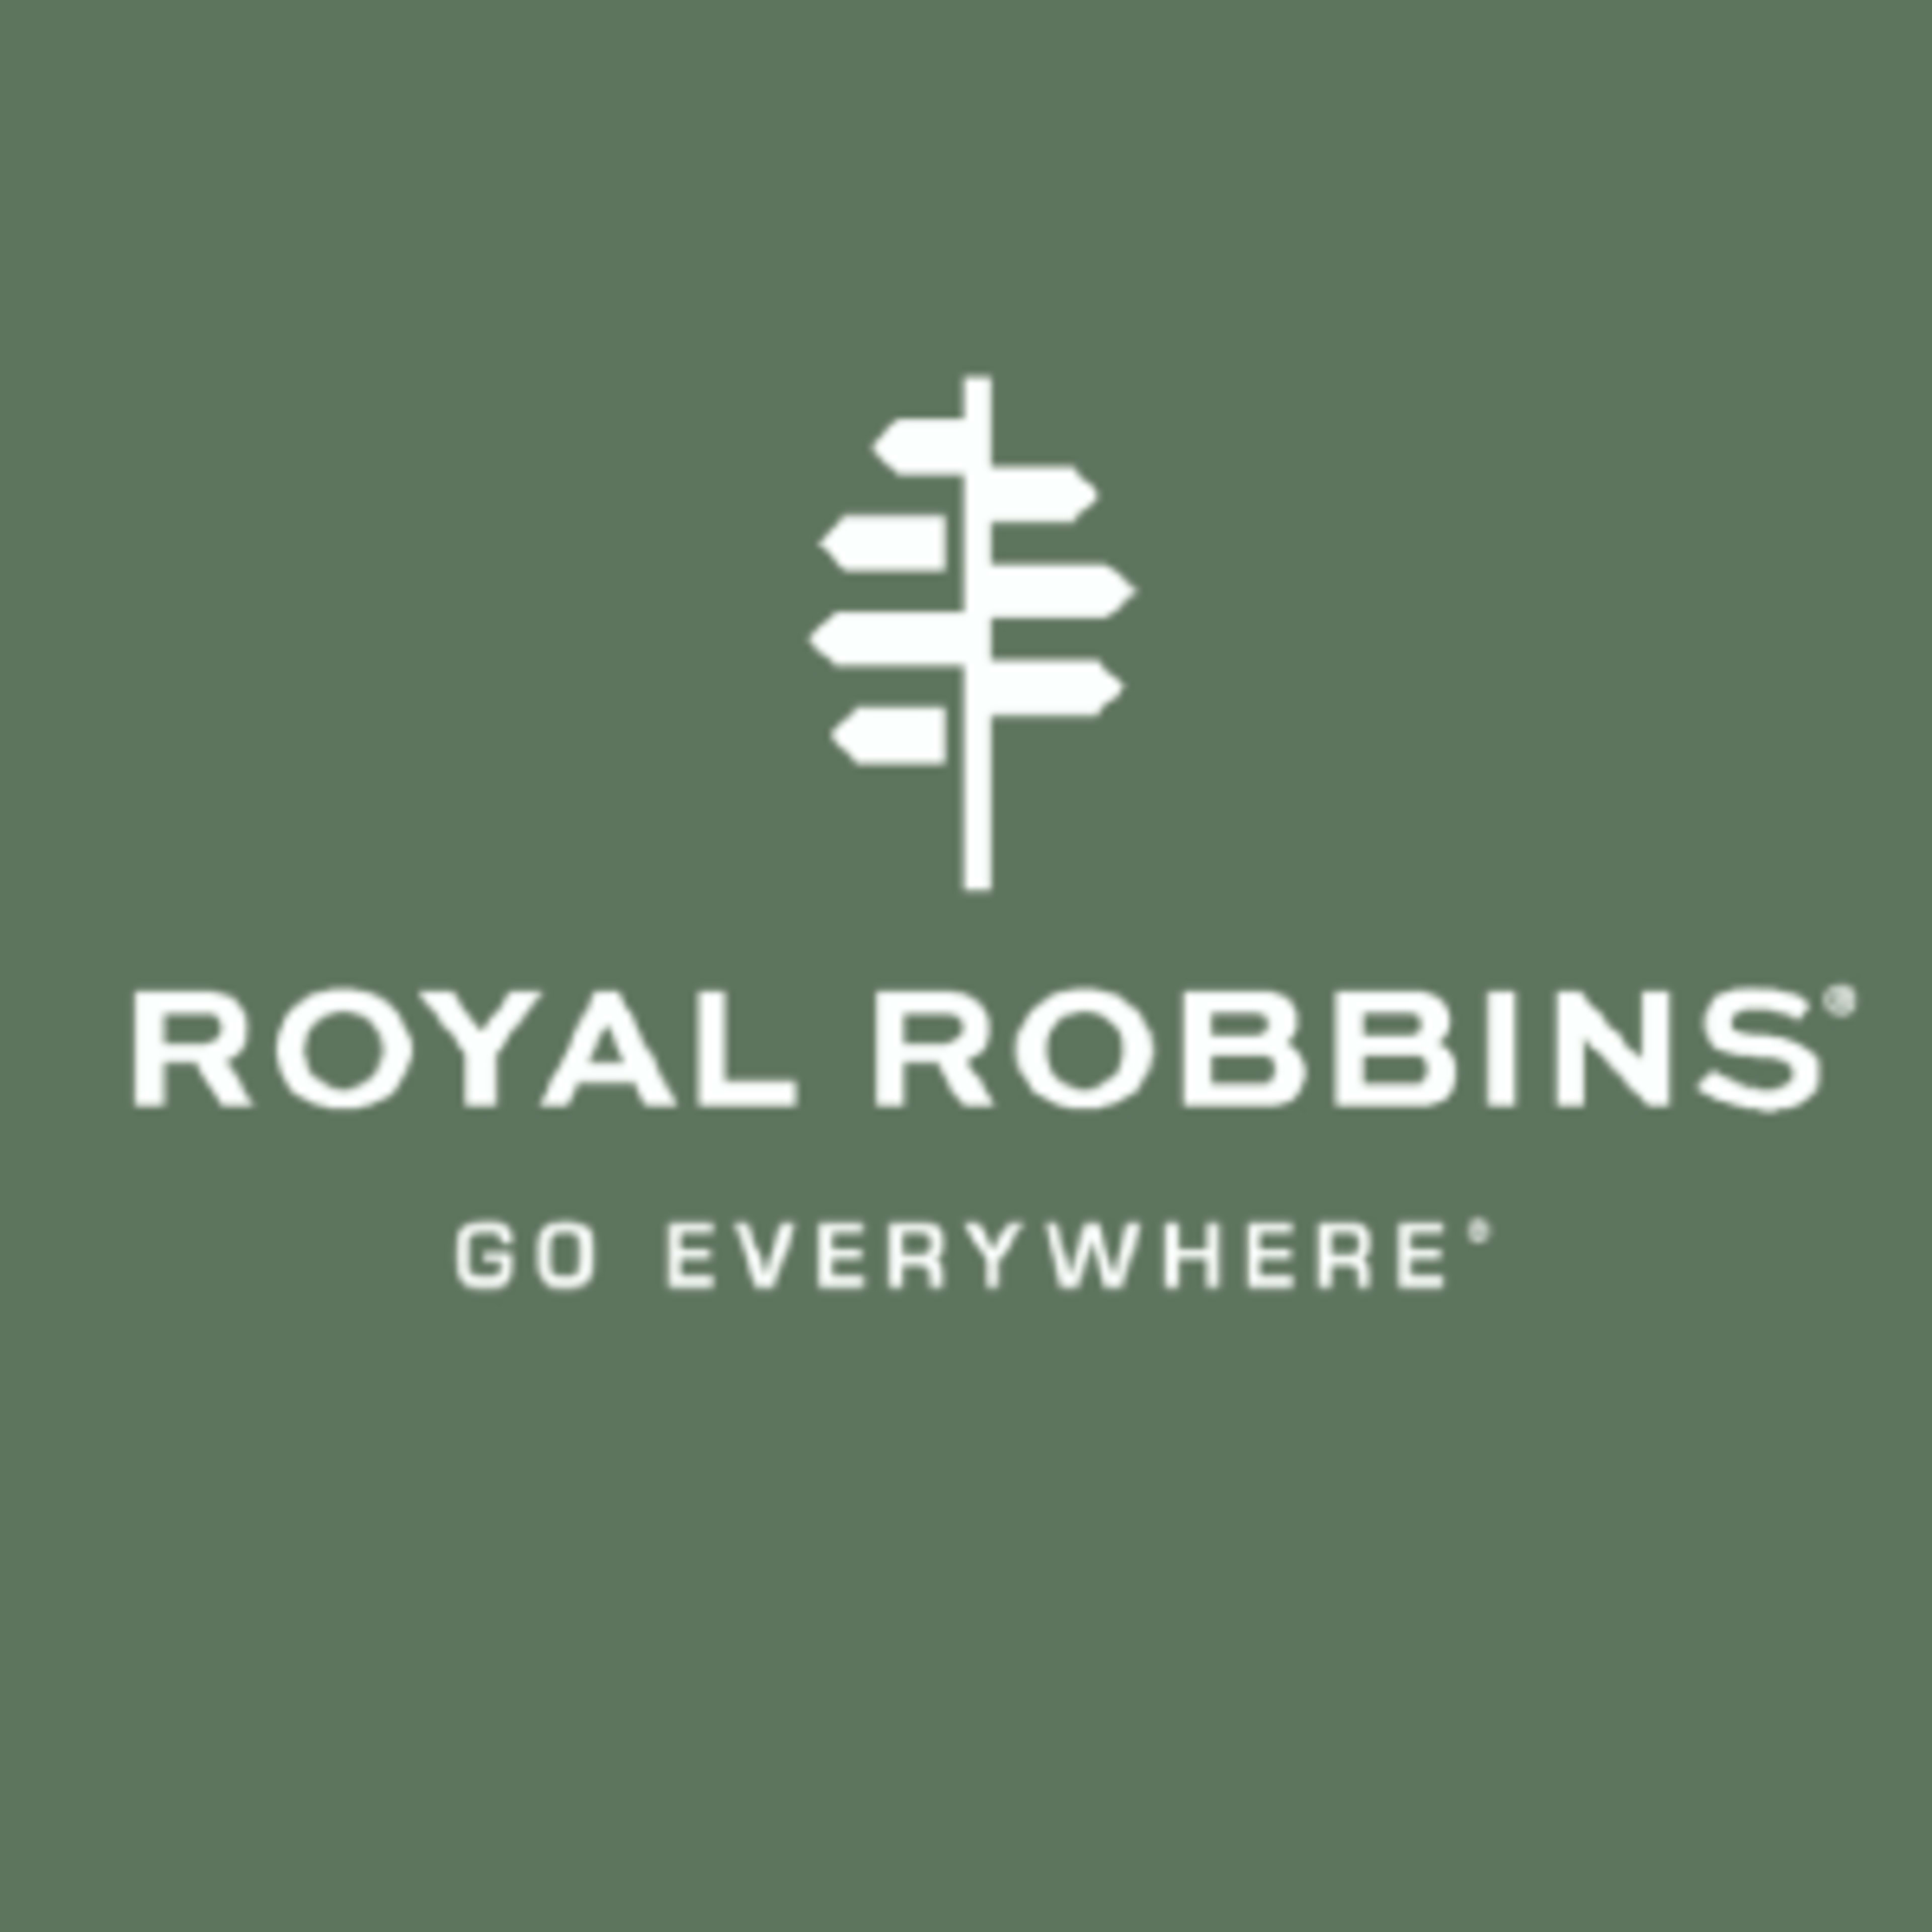 Royal RobbinsCode